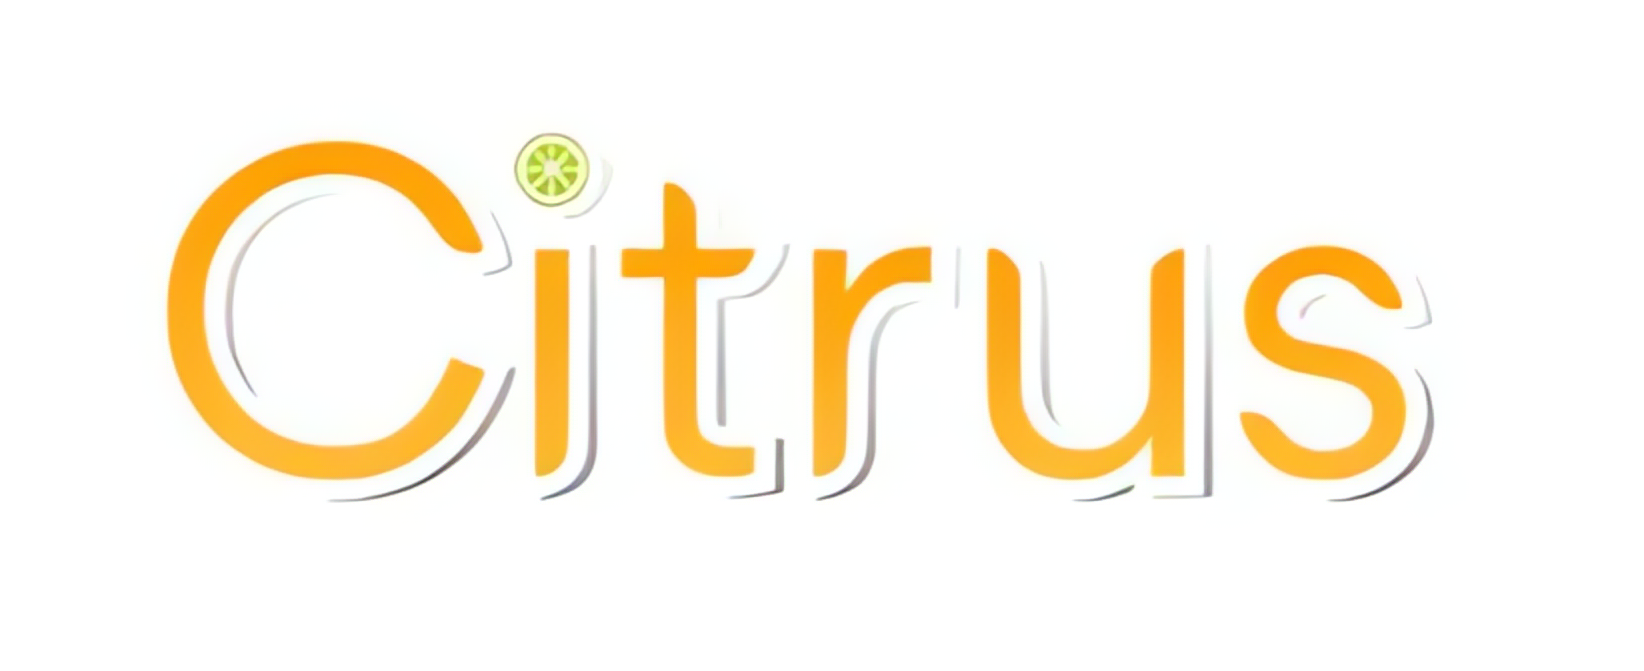 Citrus會社logo.png